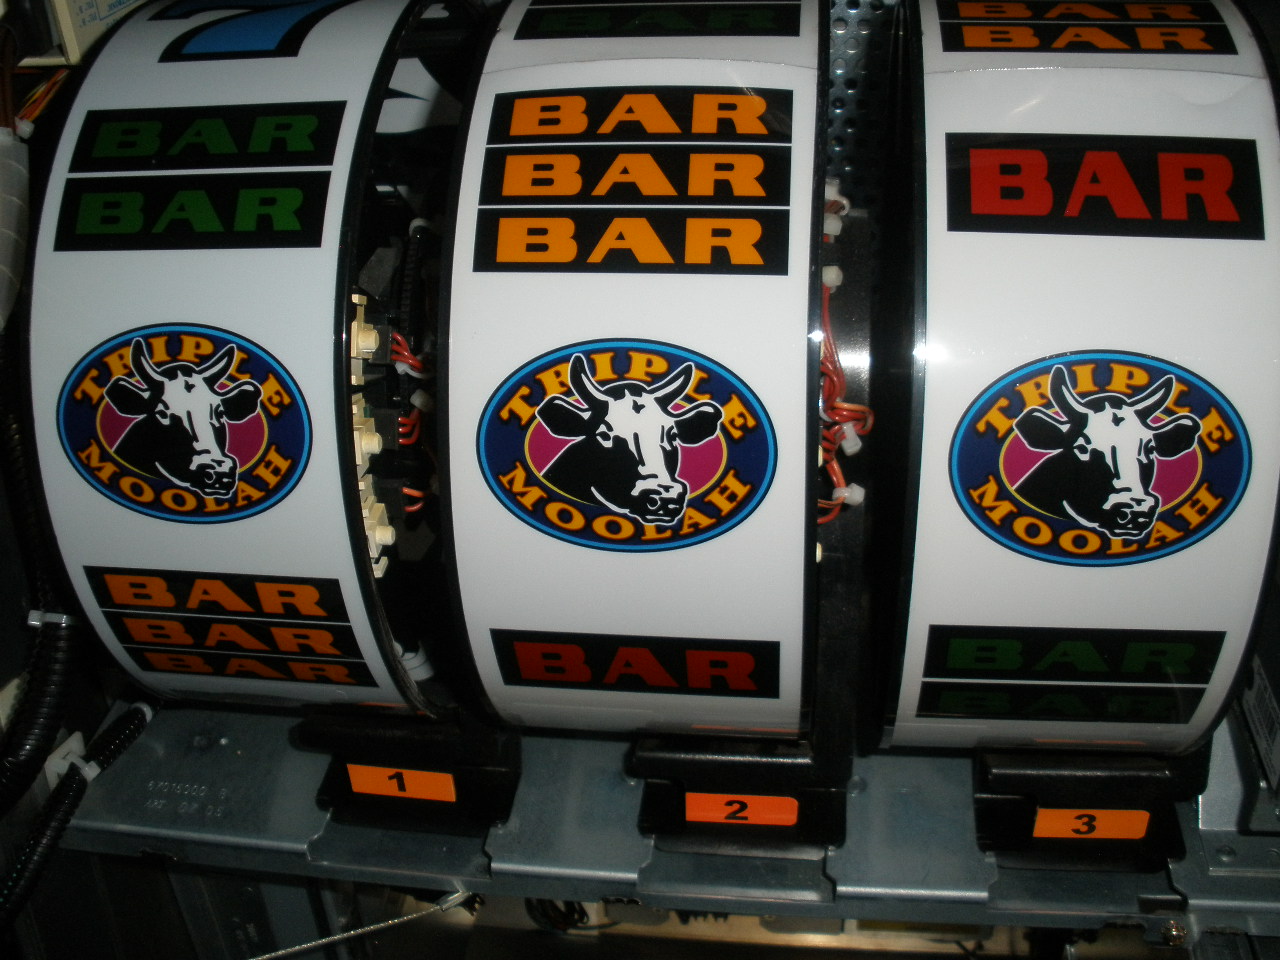 IGT TRIPLE DOUBLE MOOLAH S2000 Slot Machine For Sale • Gambler's Oasis USA